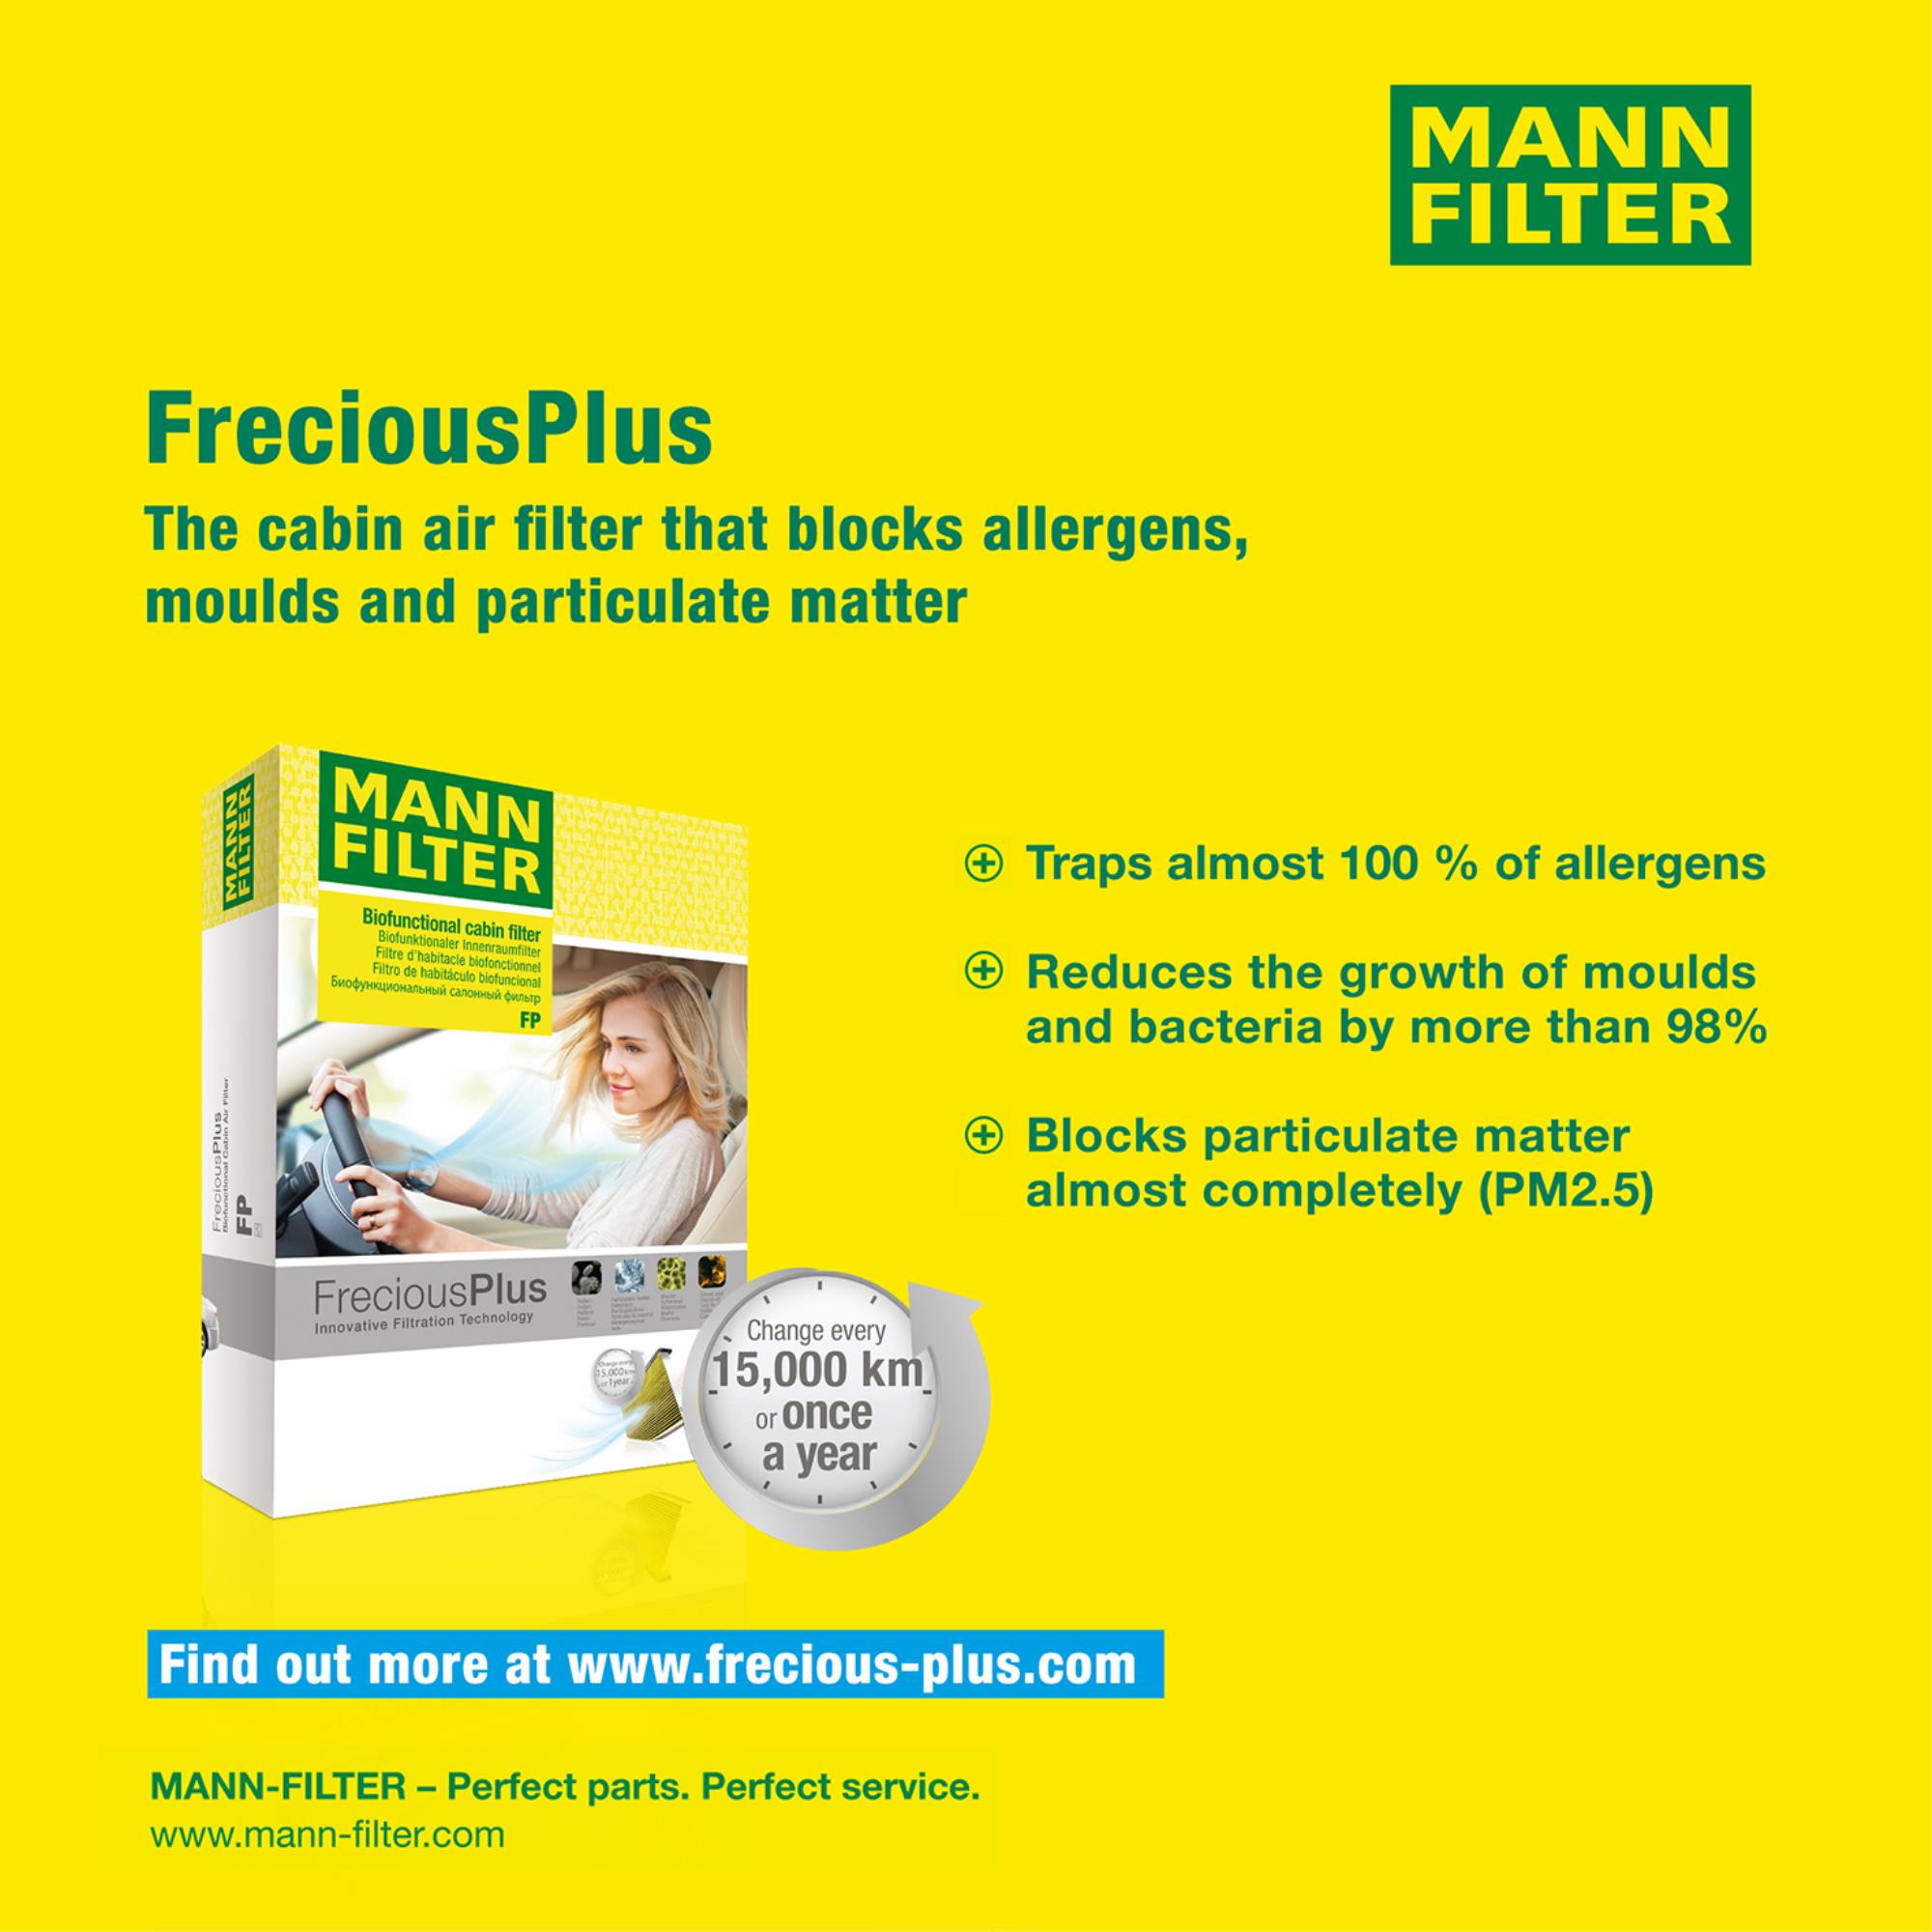 MANN-Filter Innenraumfilter Biofunctional für Allergiker FP 2436